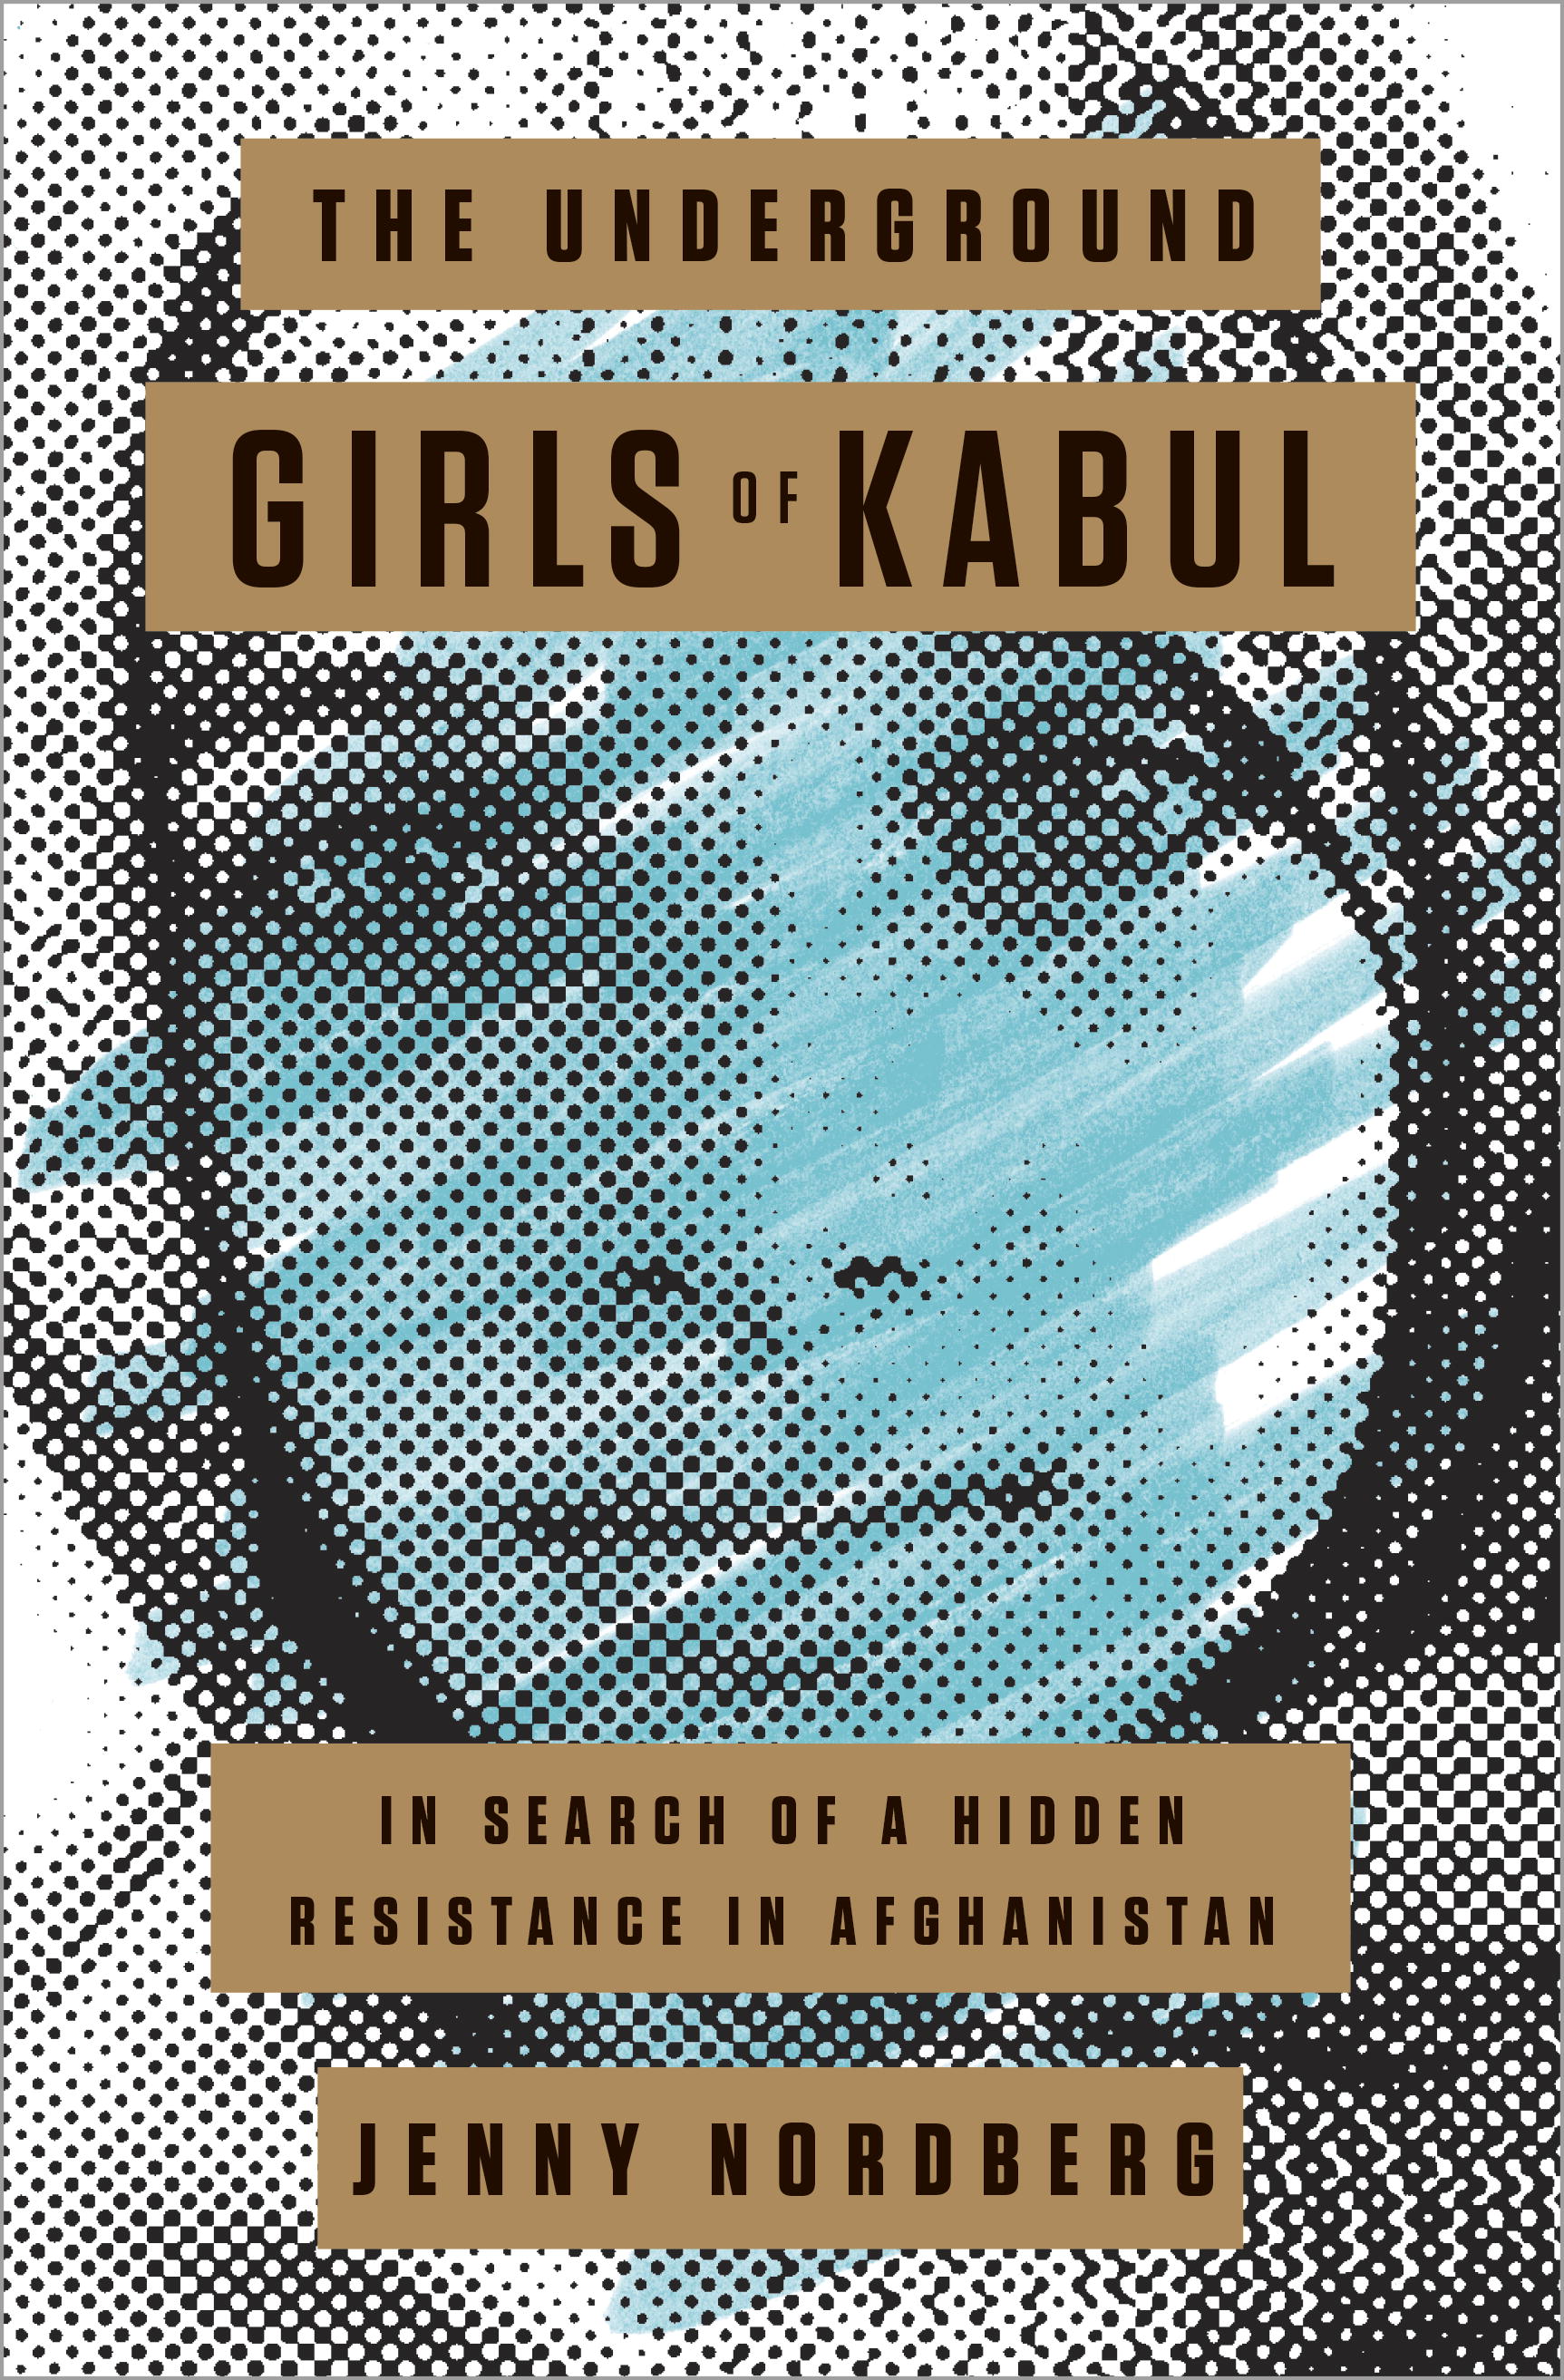 The Underground Girls of Kabul (Crown)